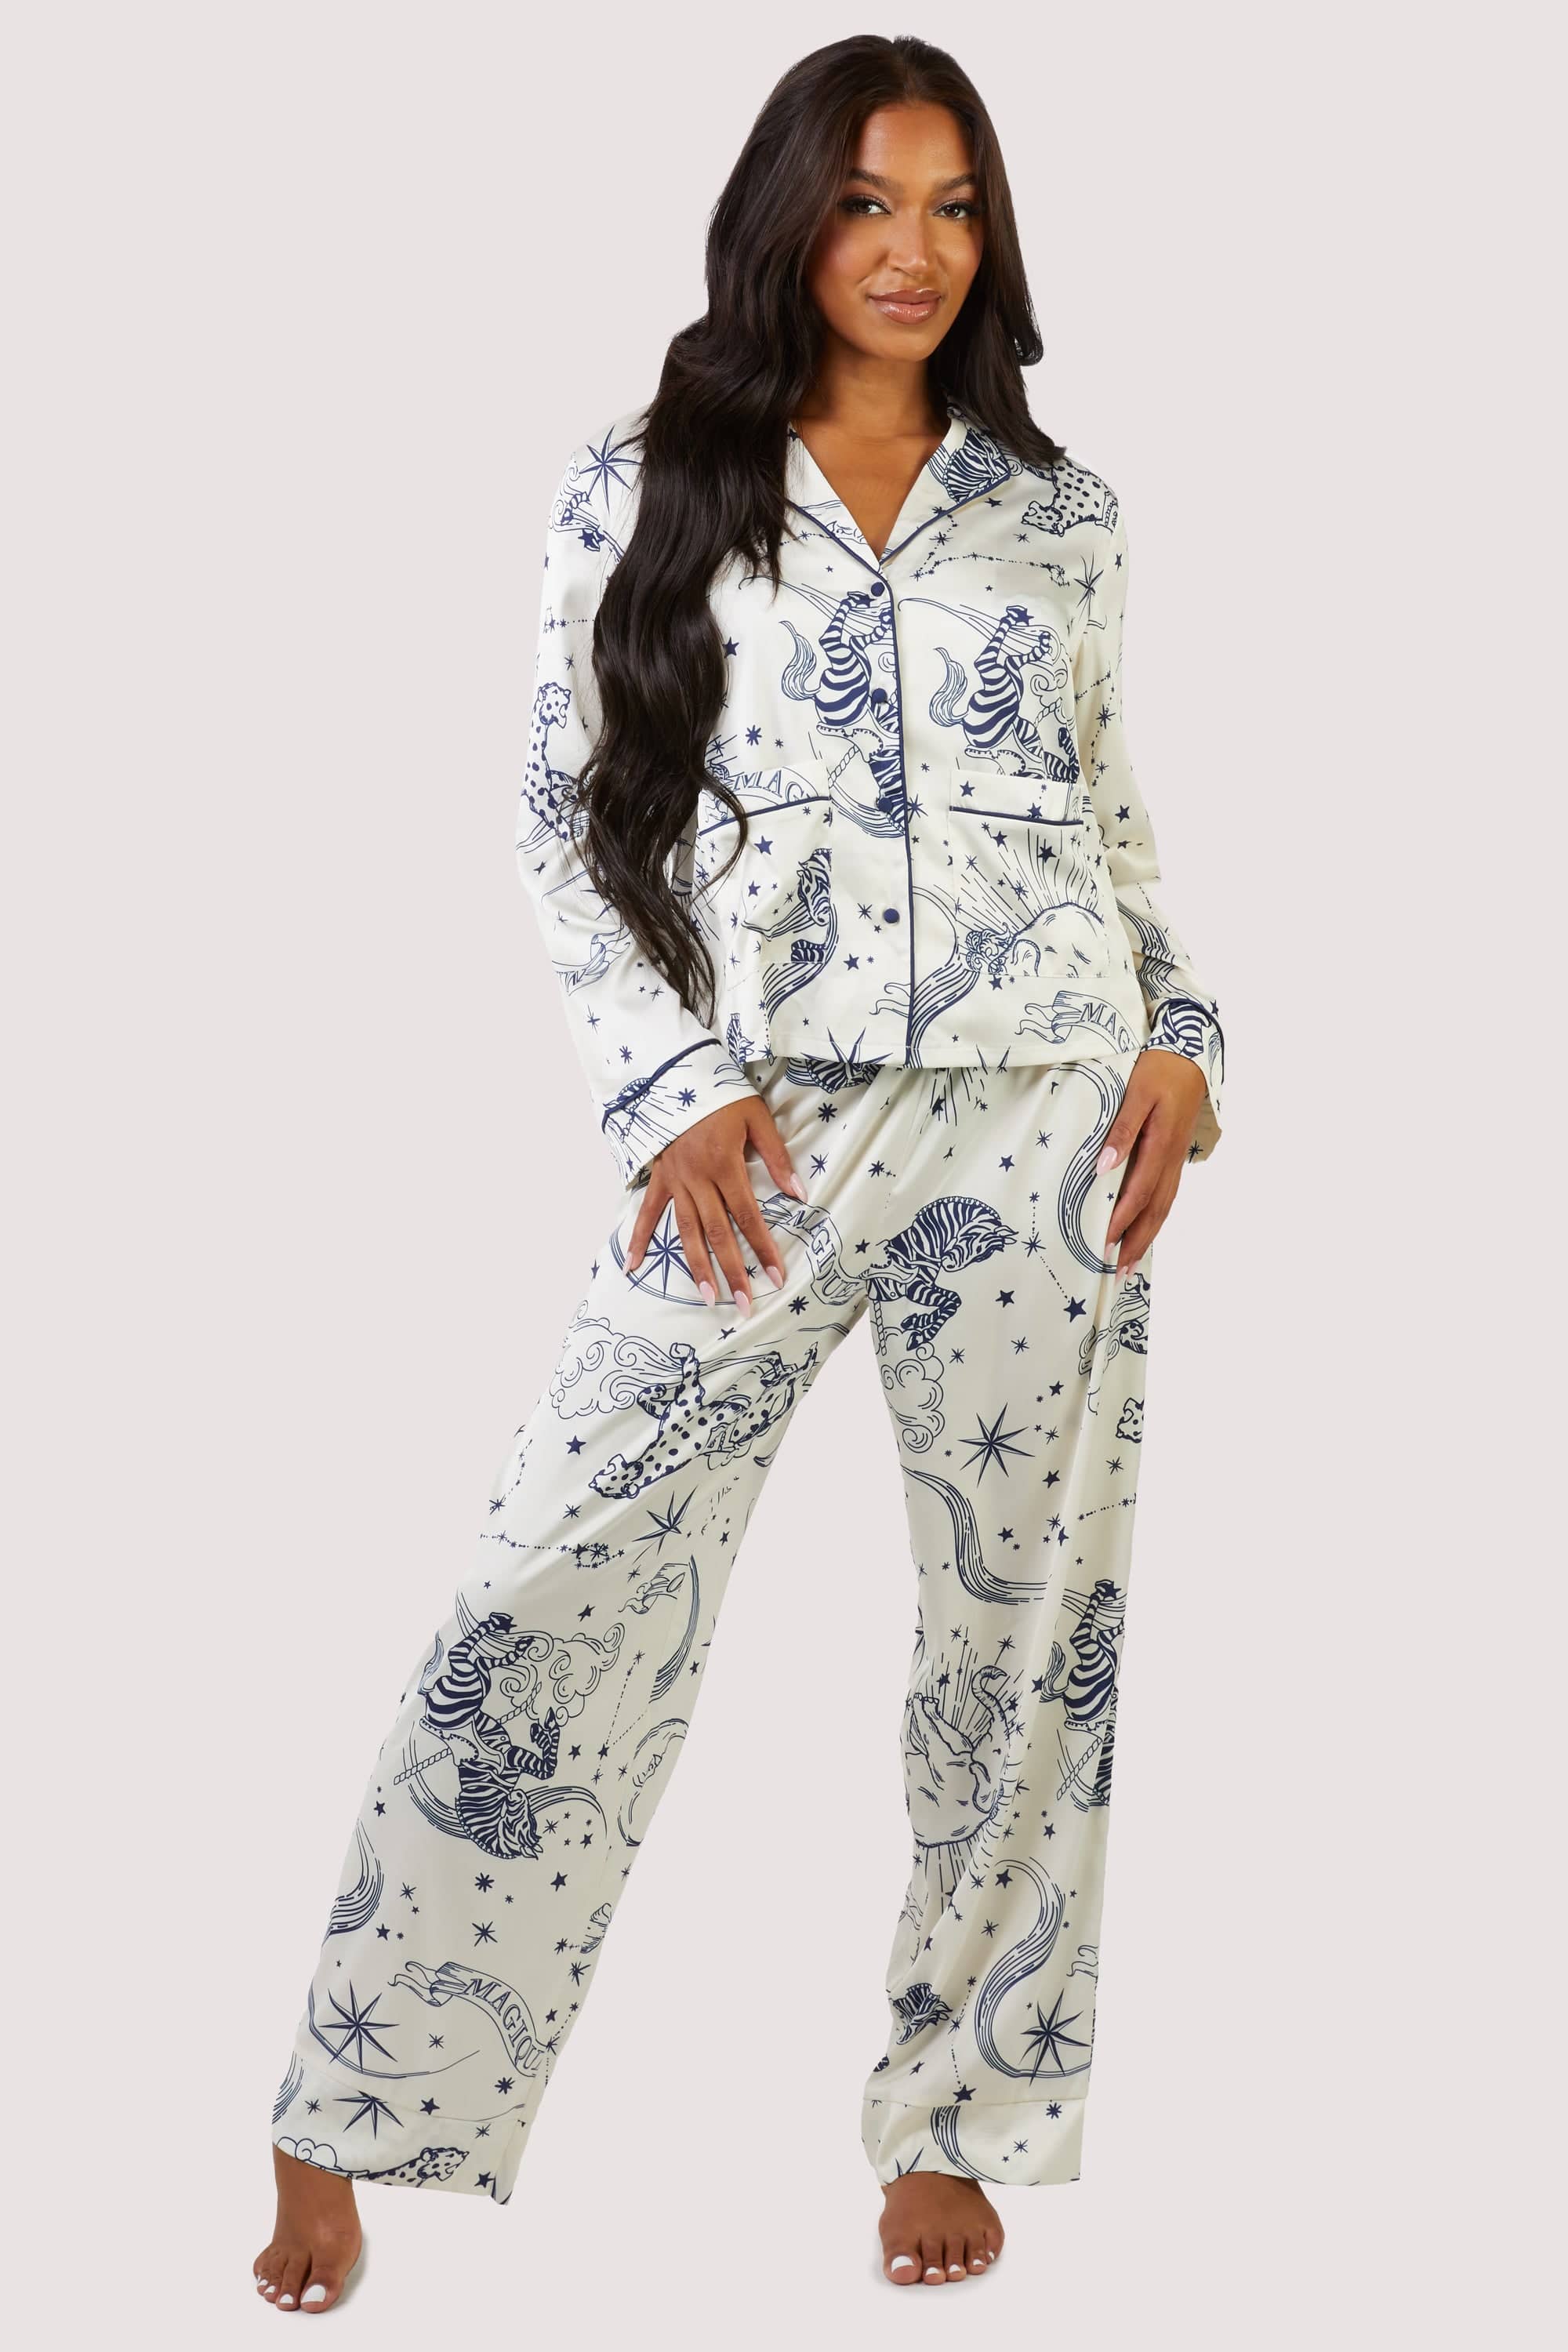 Celestial Long Sleeved Pyjama Set UK 18